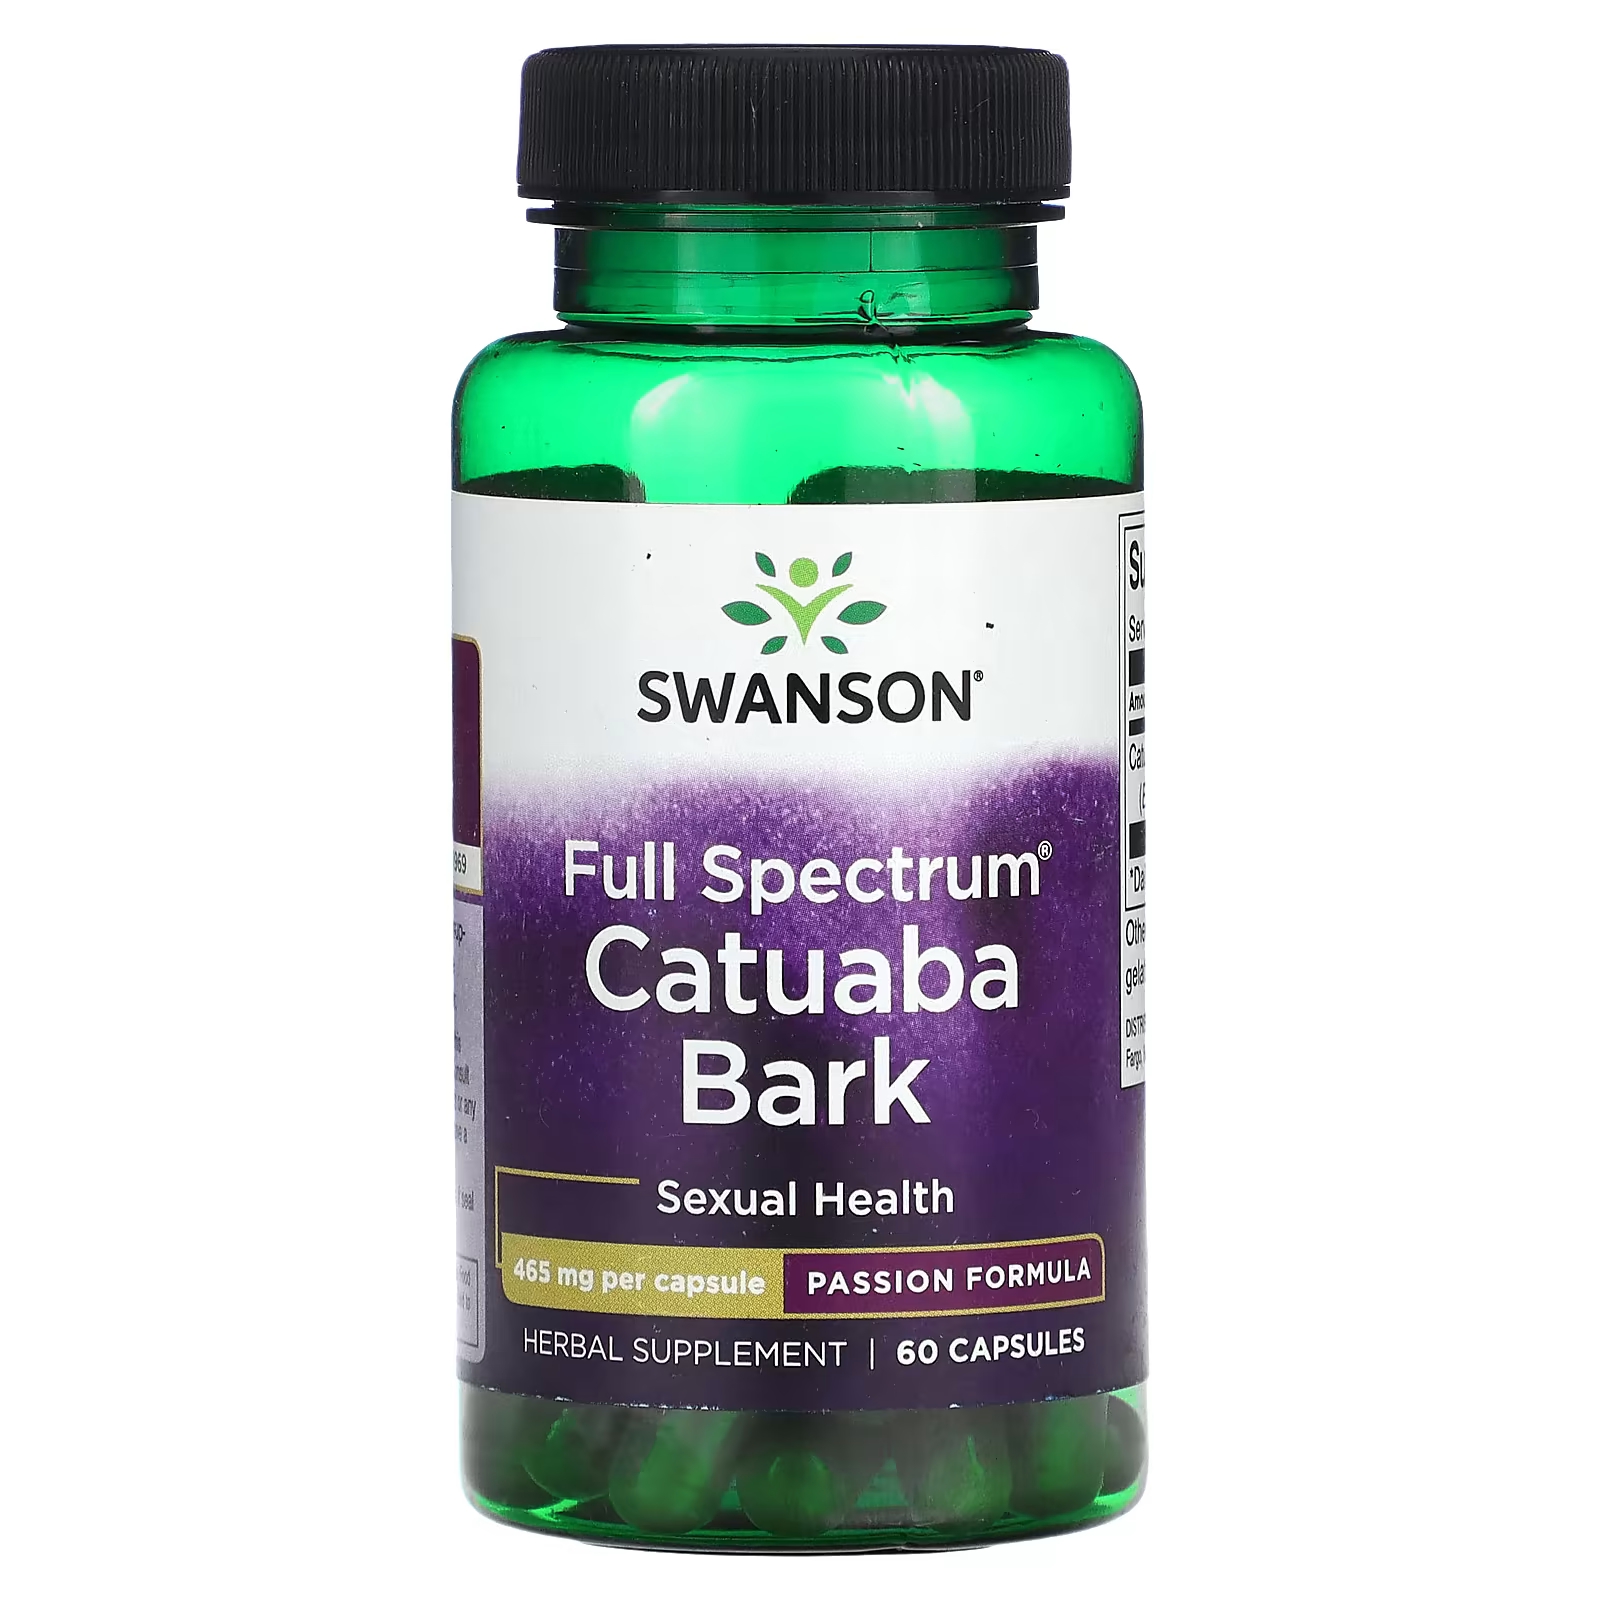 Растительная добавка Swanson Full Spectrum Catuaba Bark 465 мг, 60 капсул swanson full spectrum кора катуабы 465 мг 60 капсул